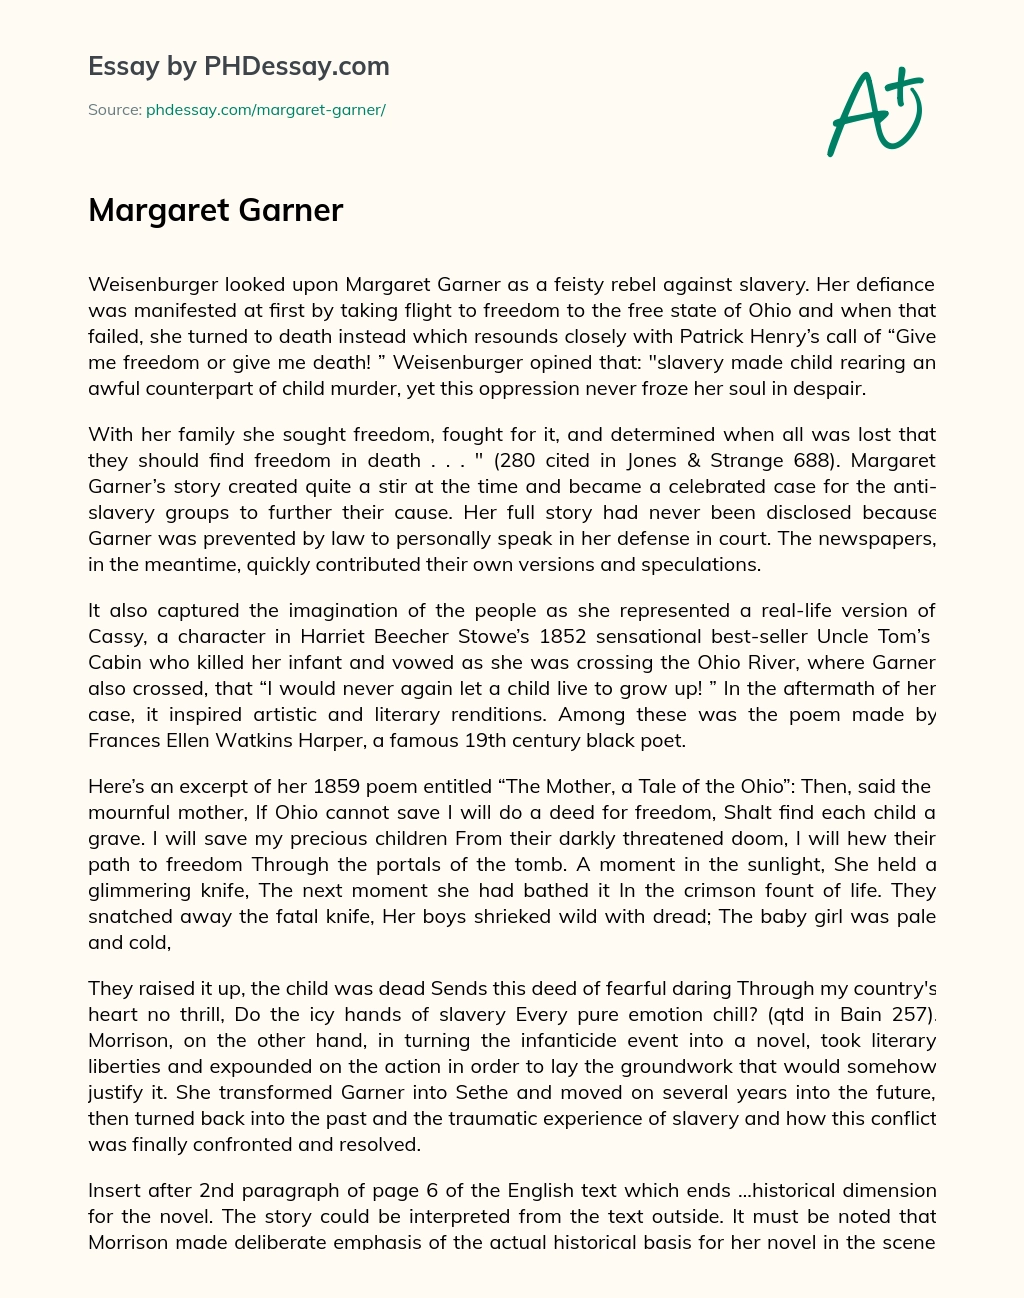 Margaret Garner essay